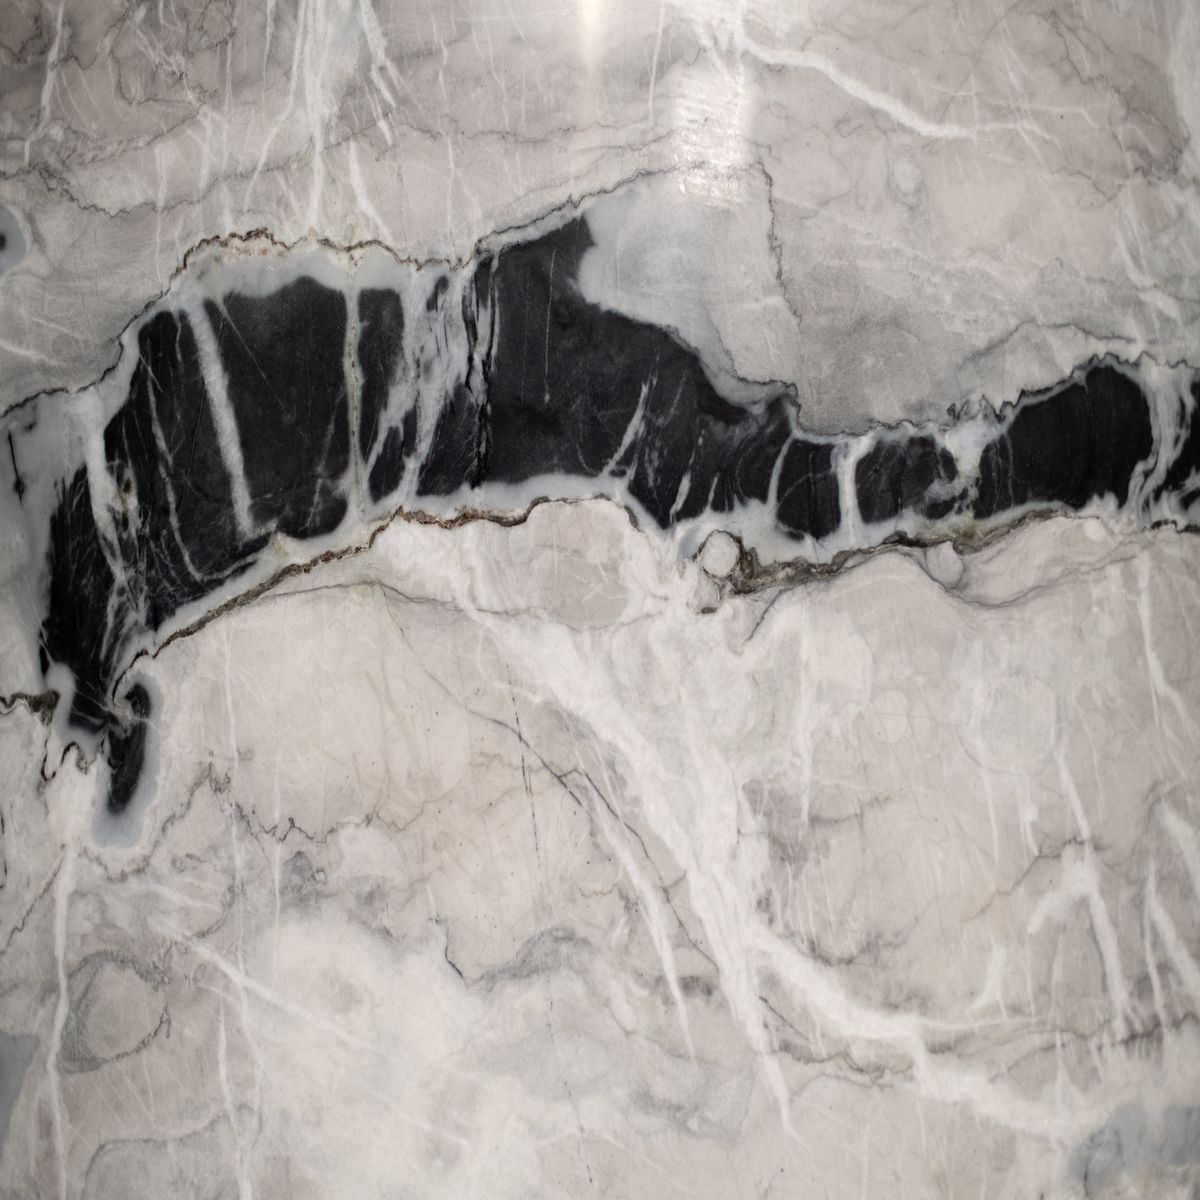 artic ocean - white ocean - atlantic white granites